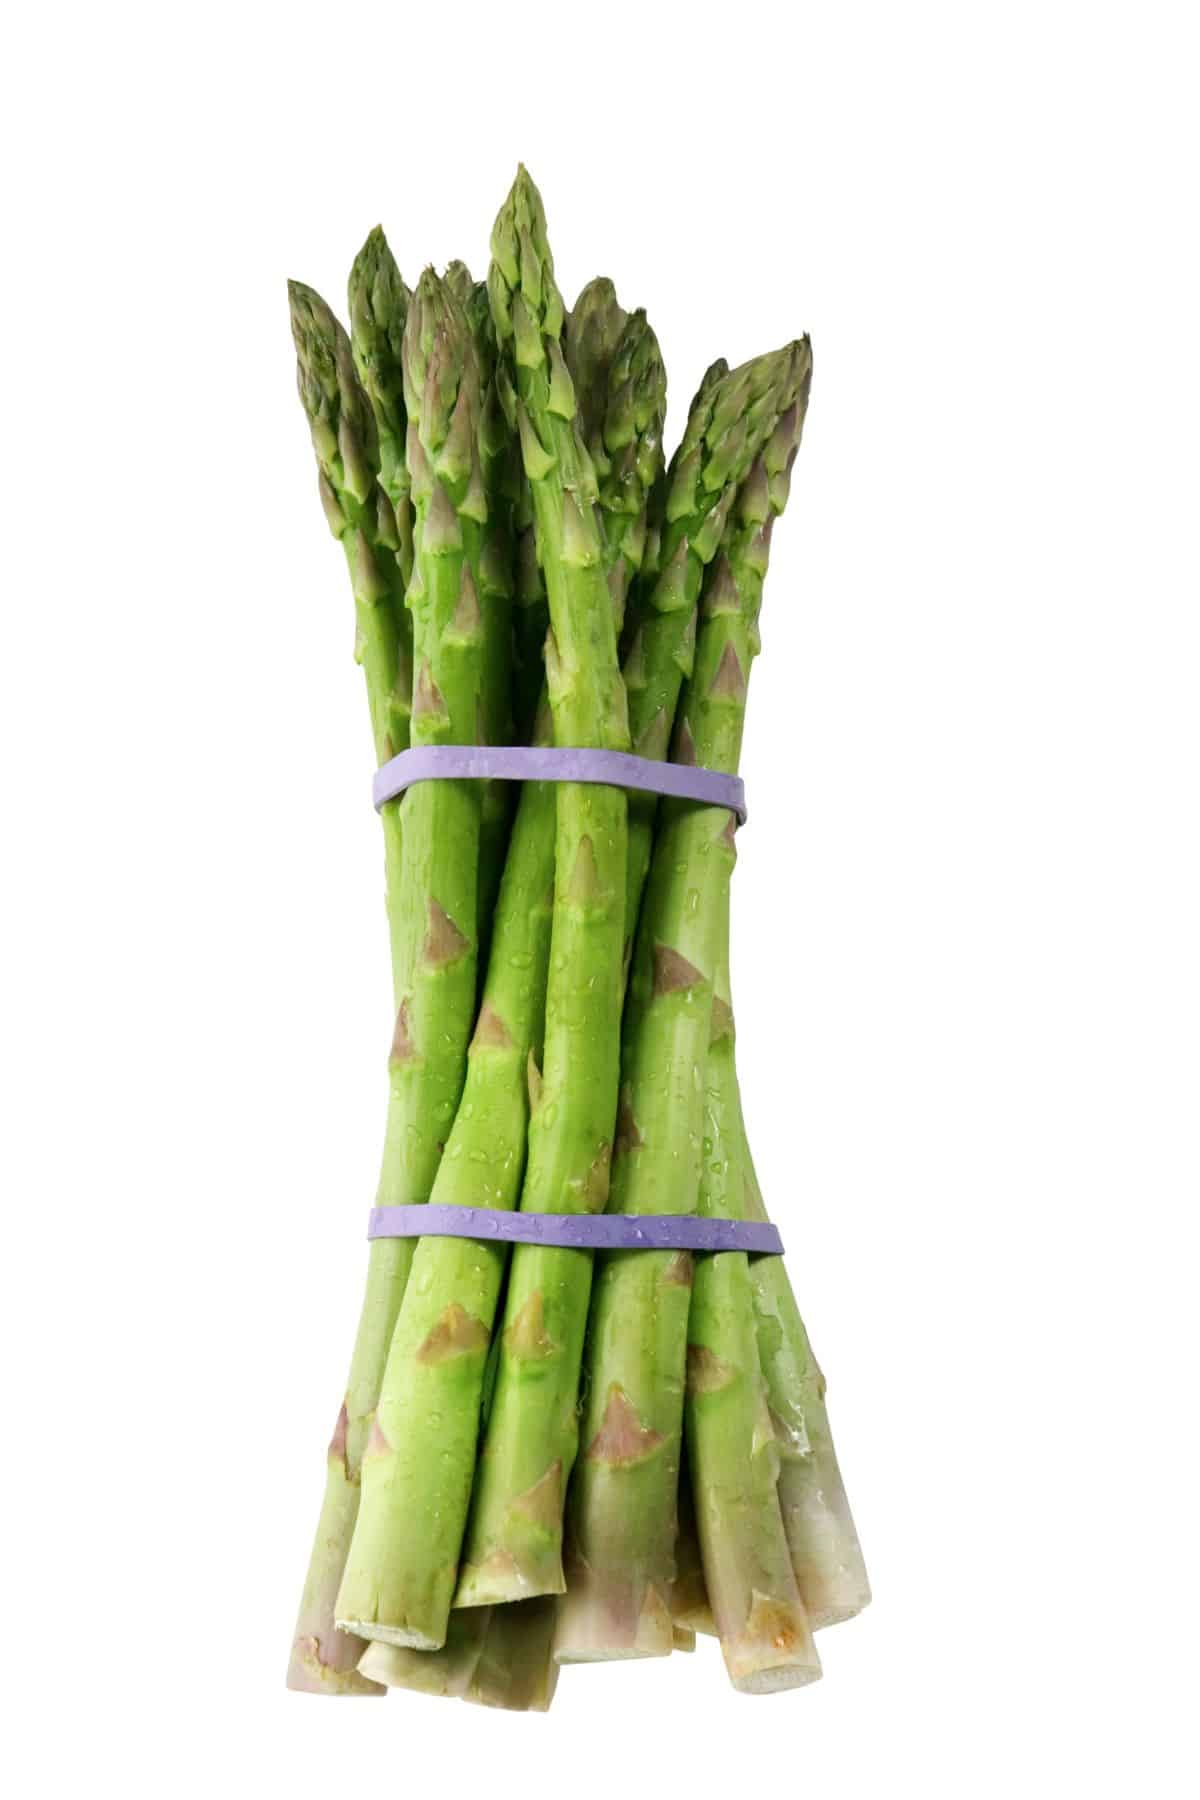 photo of asparagus on table.